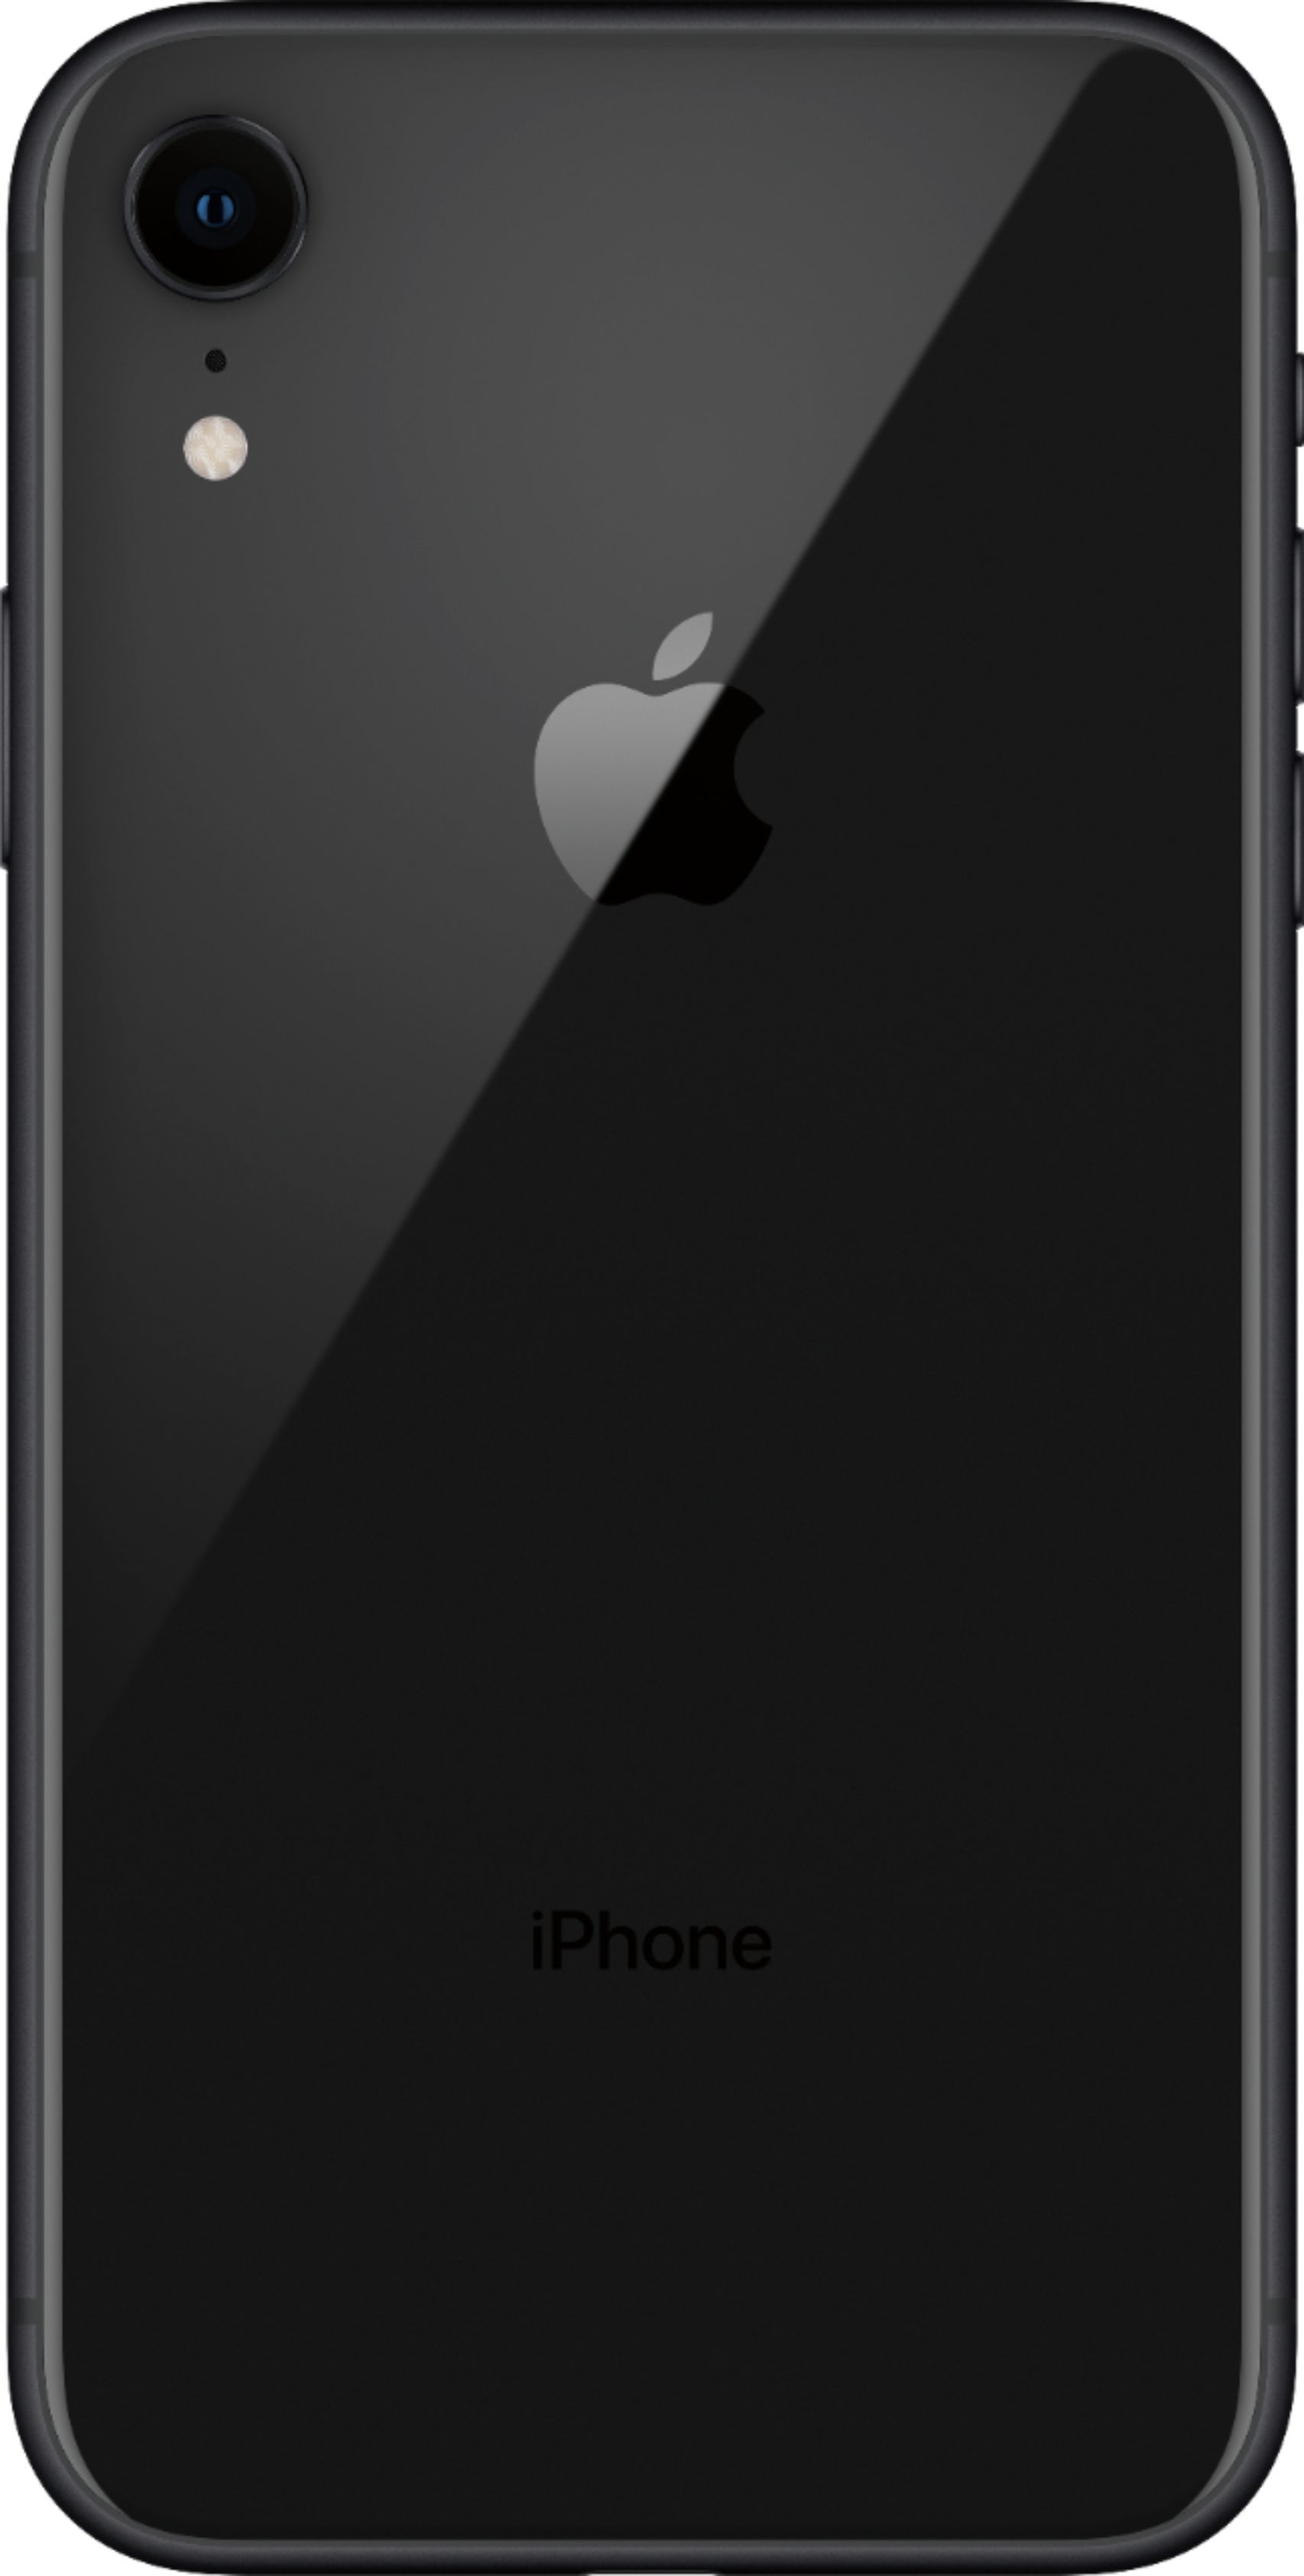 誠実 iPhone XR Black 64 GB Softbank - 通販 - www.stekautomotive.com